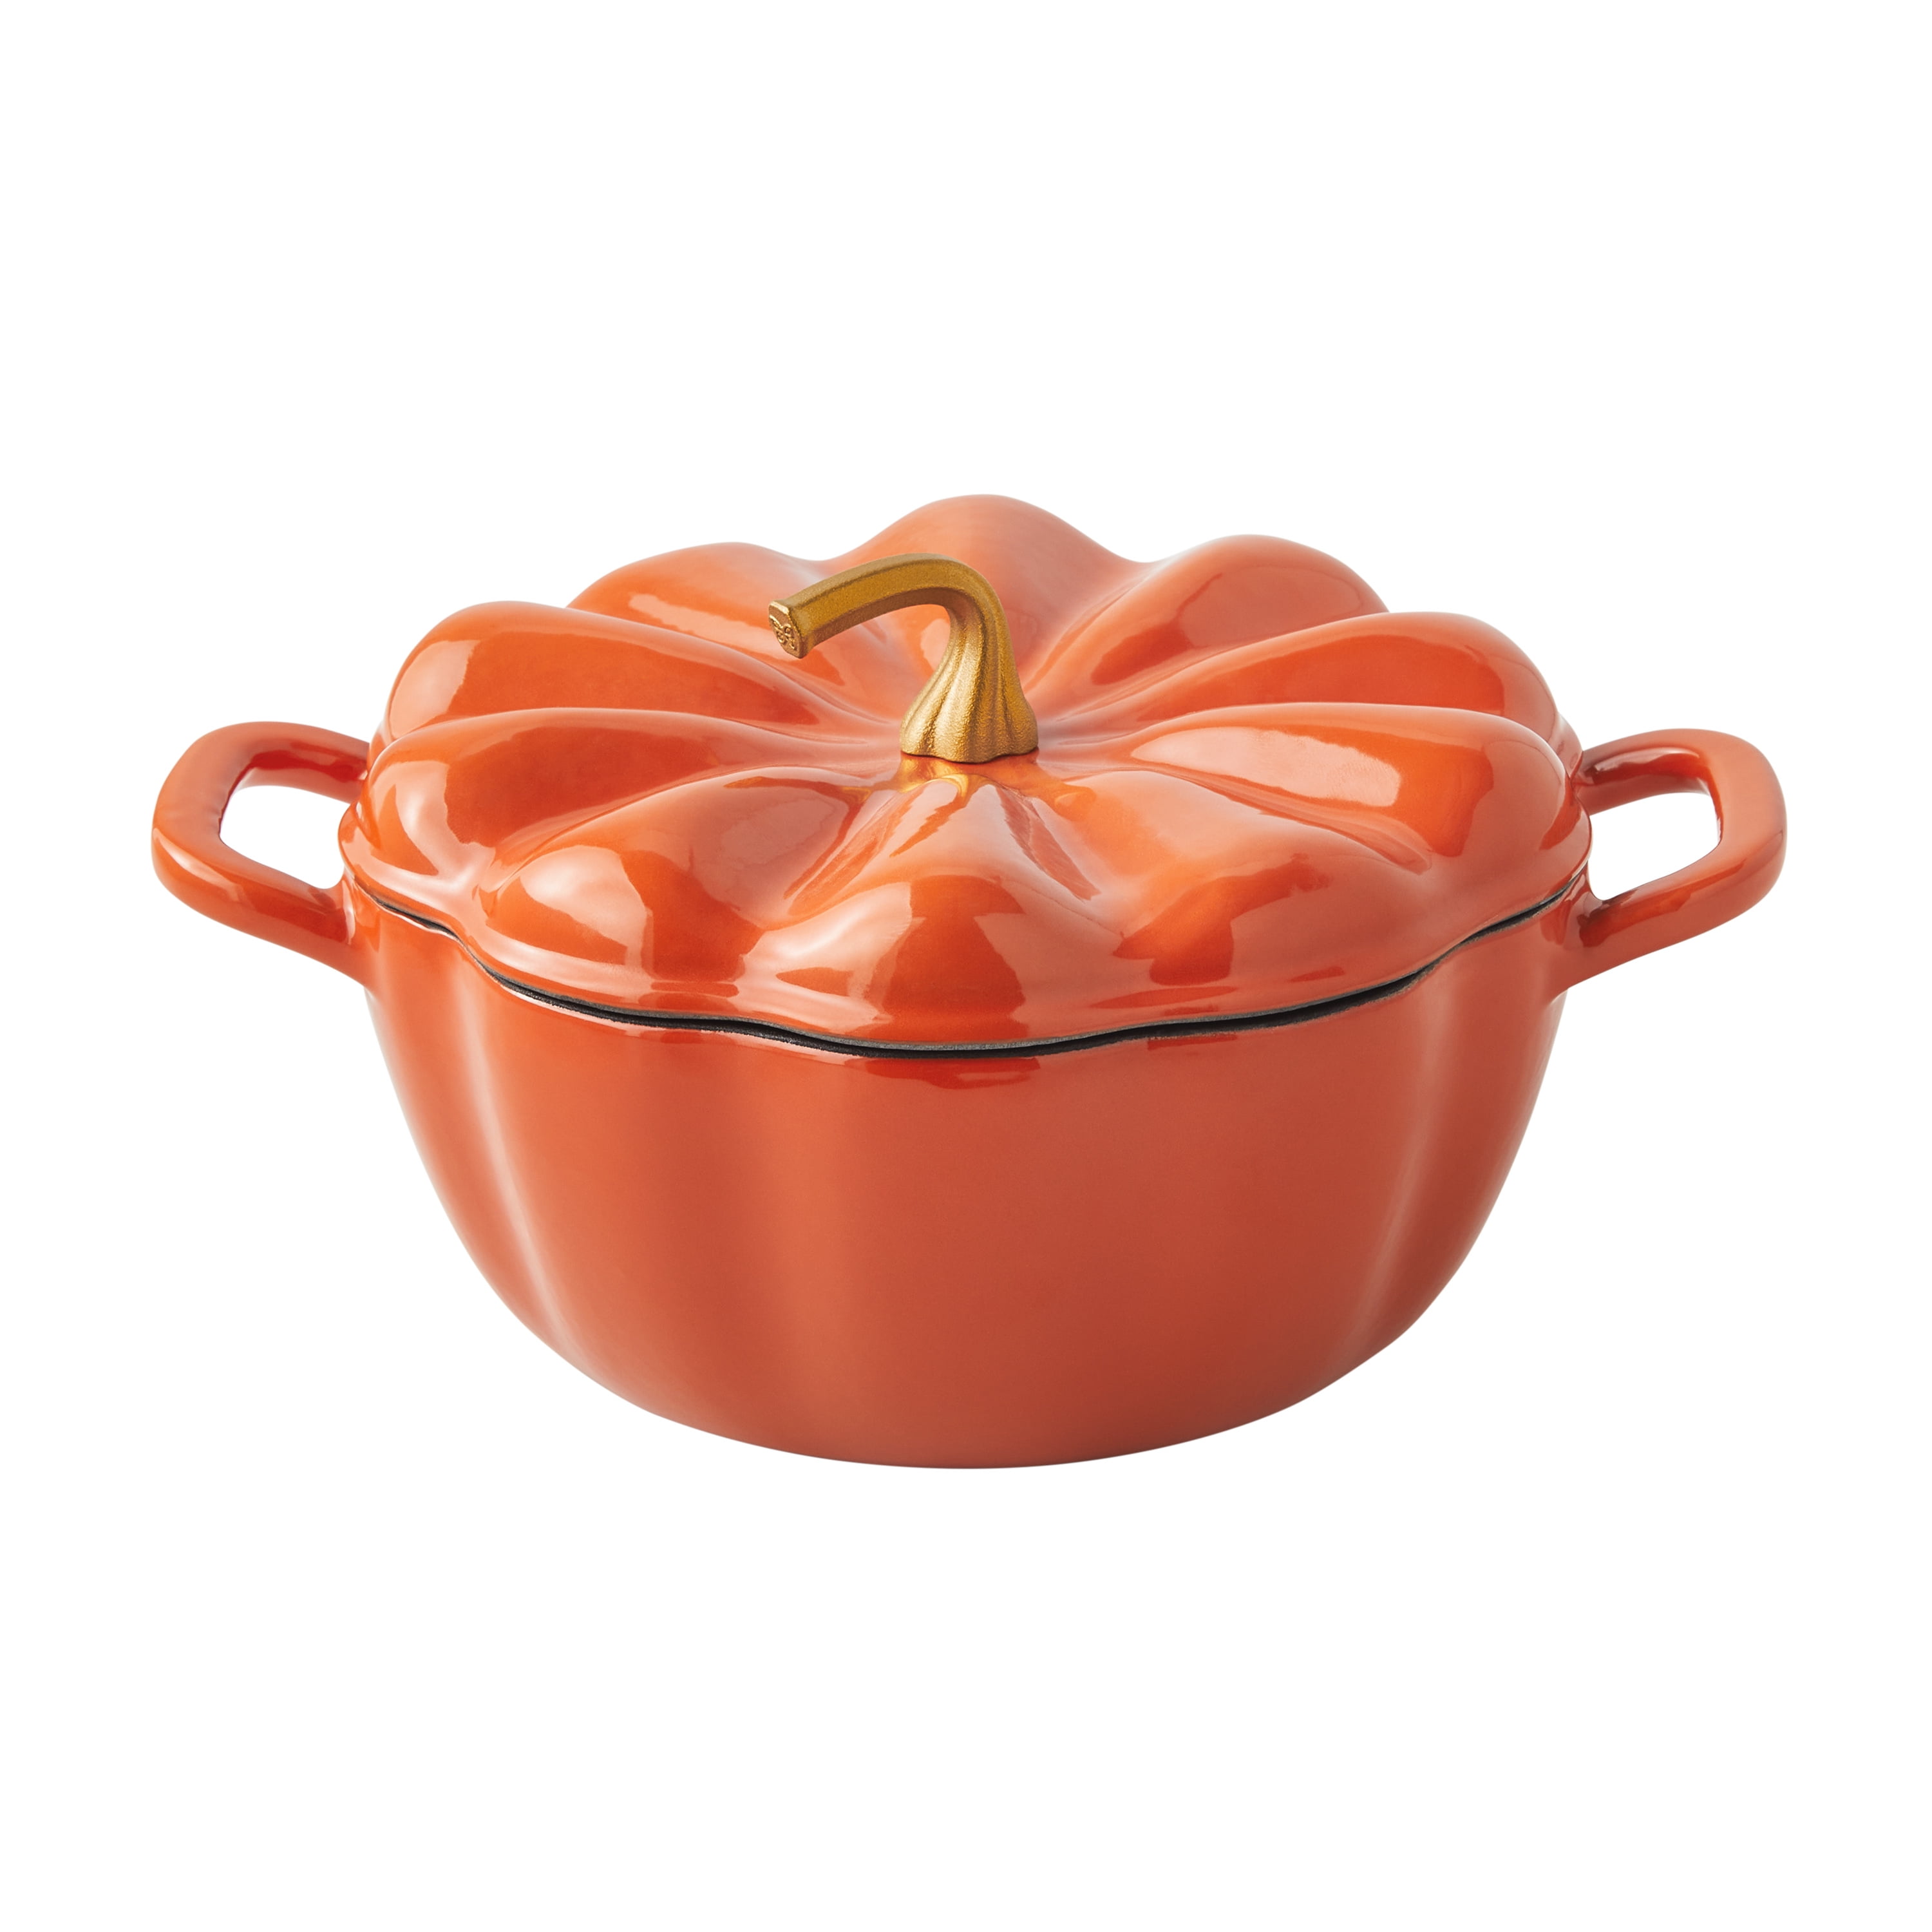 2 qt. Enameled Cast Iron Pumpkin Dutch Oven $15.99 (reg.$39.99) at